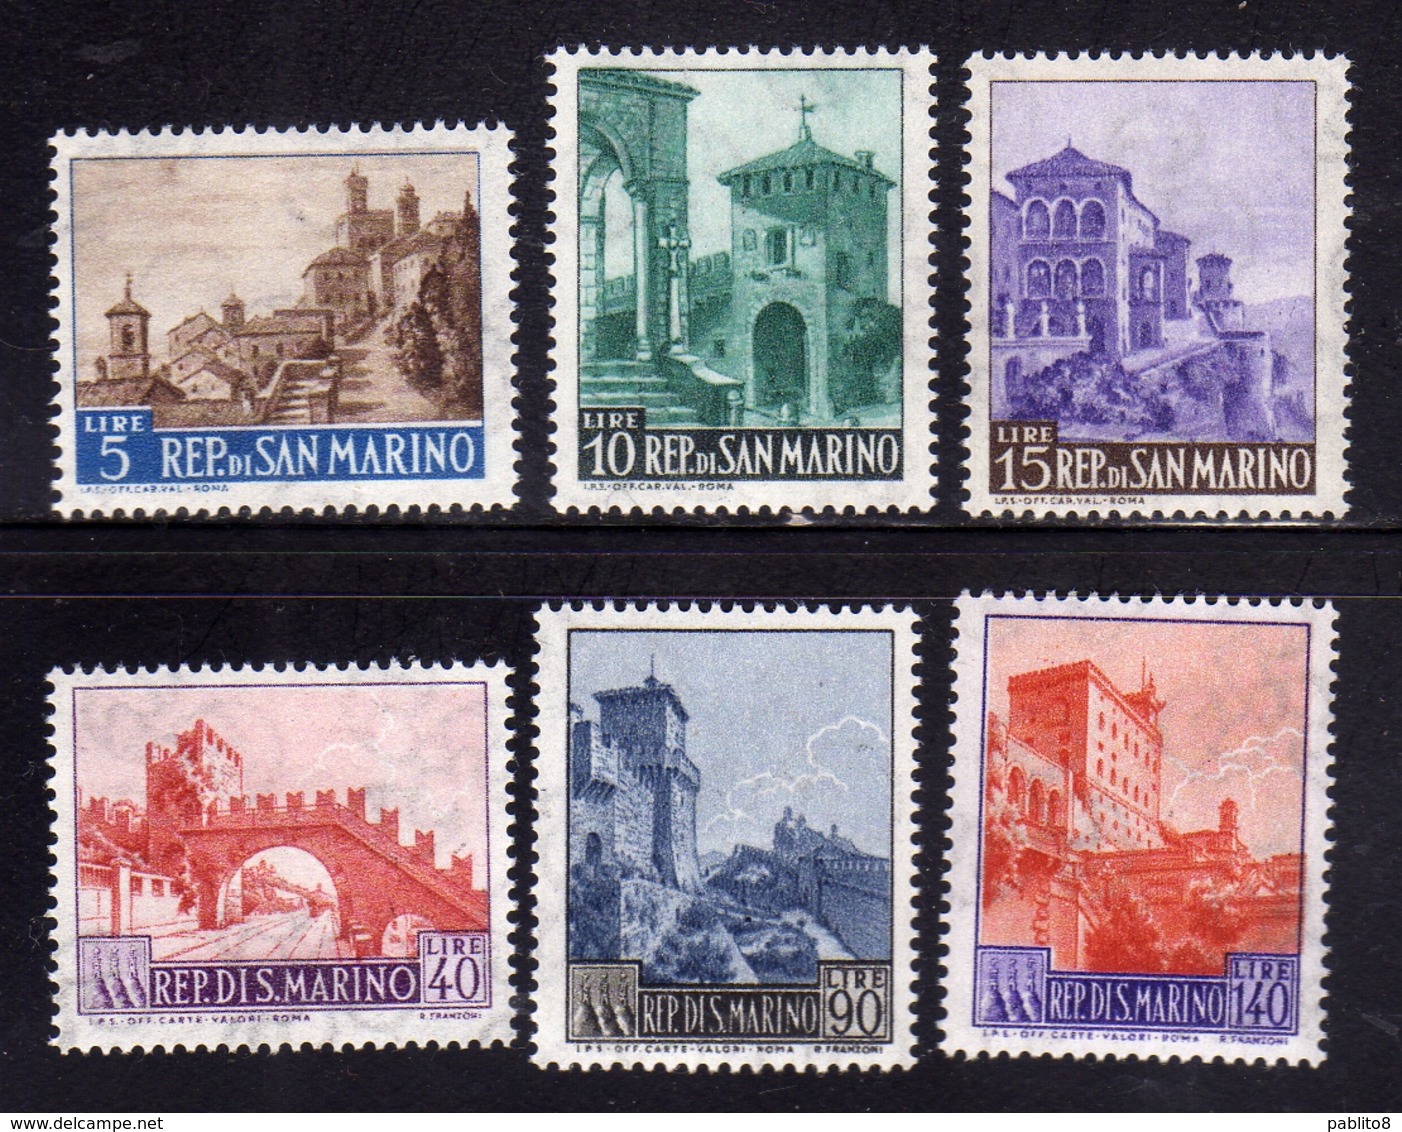 REPUBBLICA DI SAN MARINO 1966 VEDUTE VIEWS SERIE COMPLETA COMPLETE SET MNH - Unused Stamps